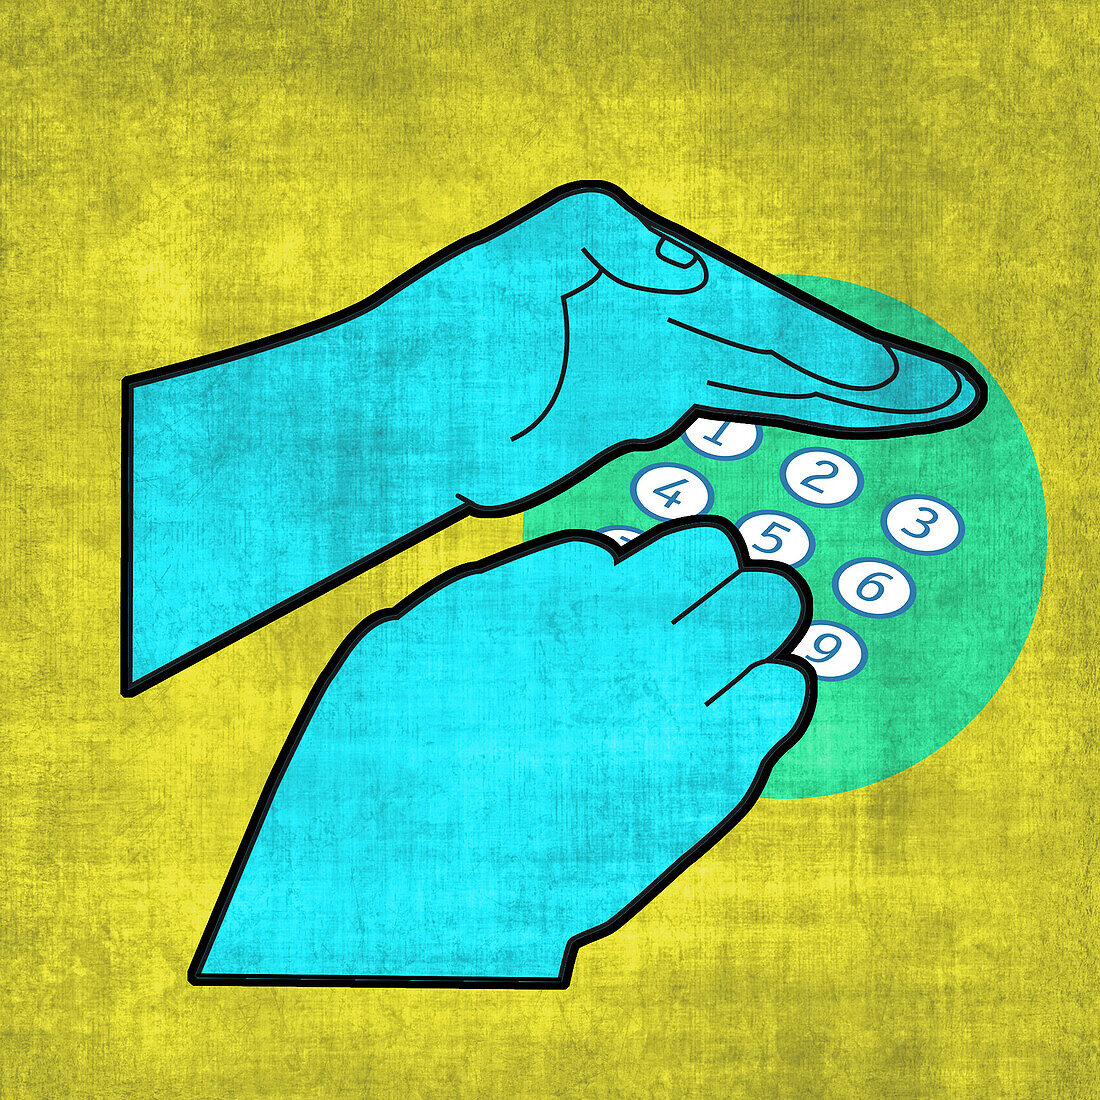 Hands entering a pin code, illustration